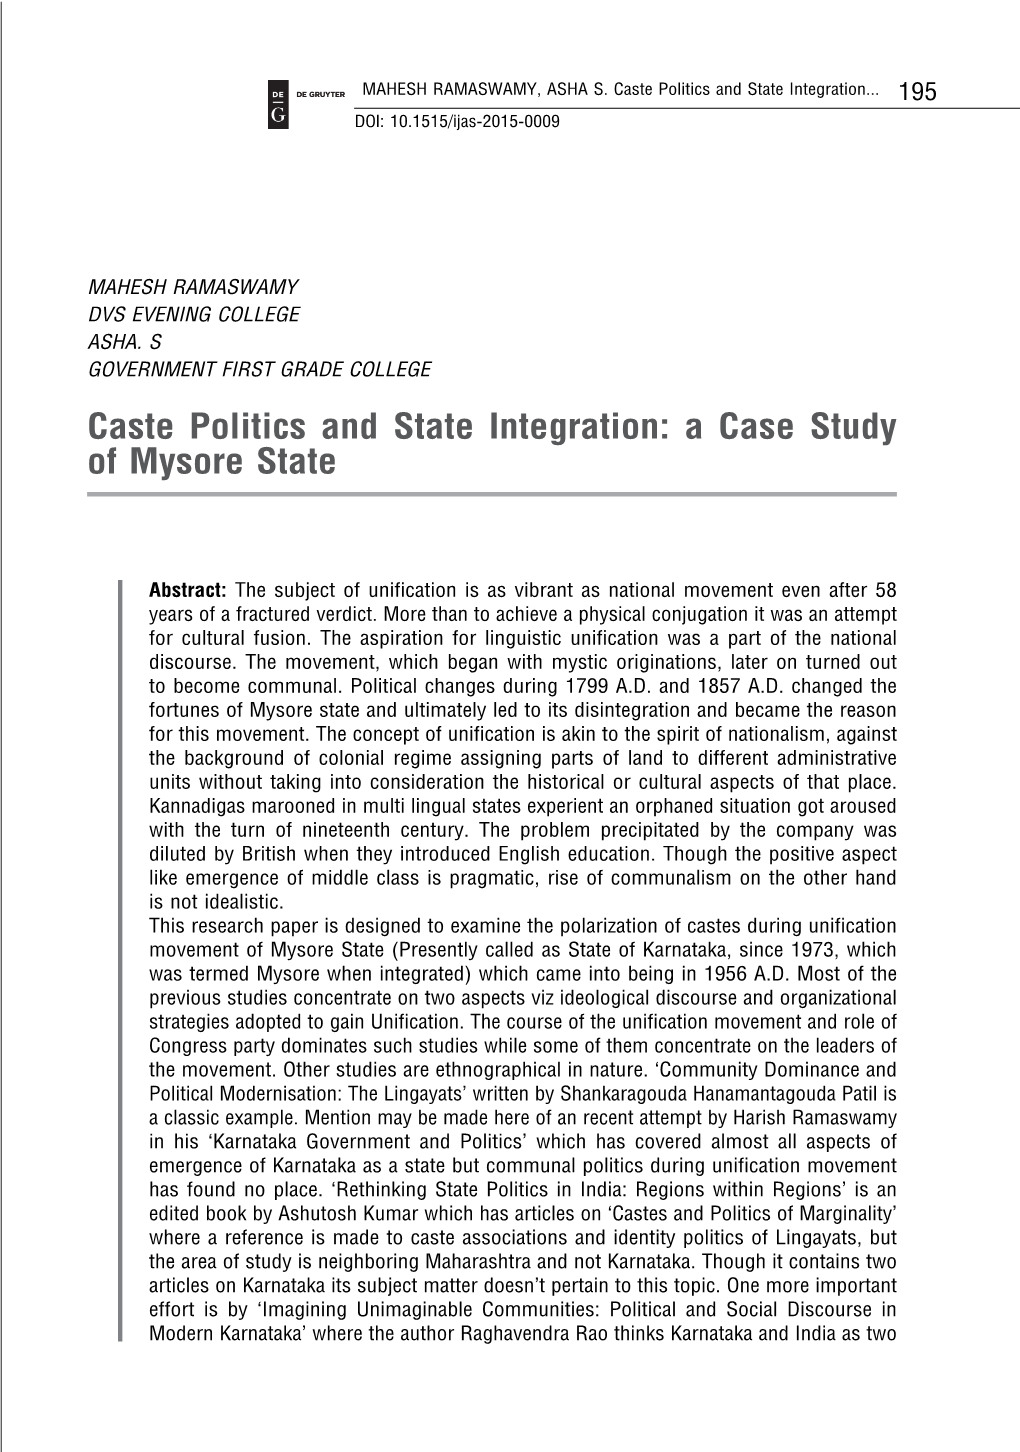 Caste Politics and State Integration: a Case Study of Mysore State